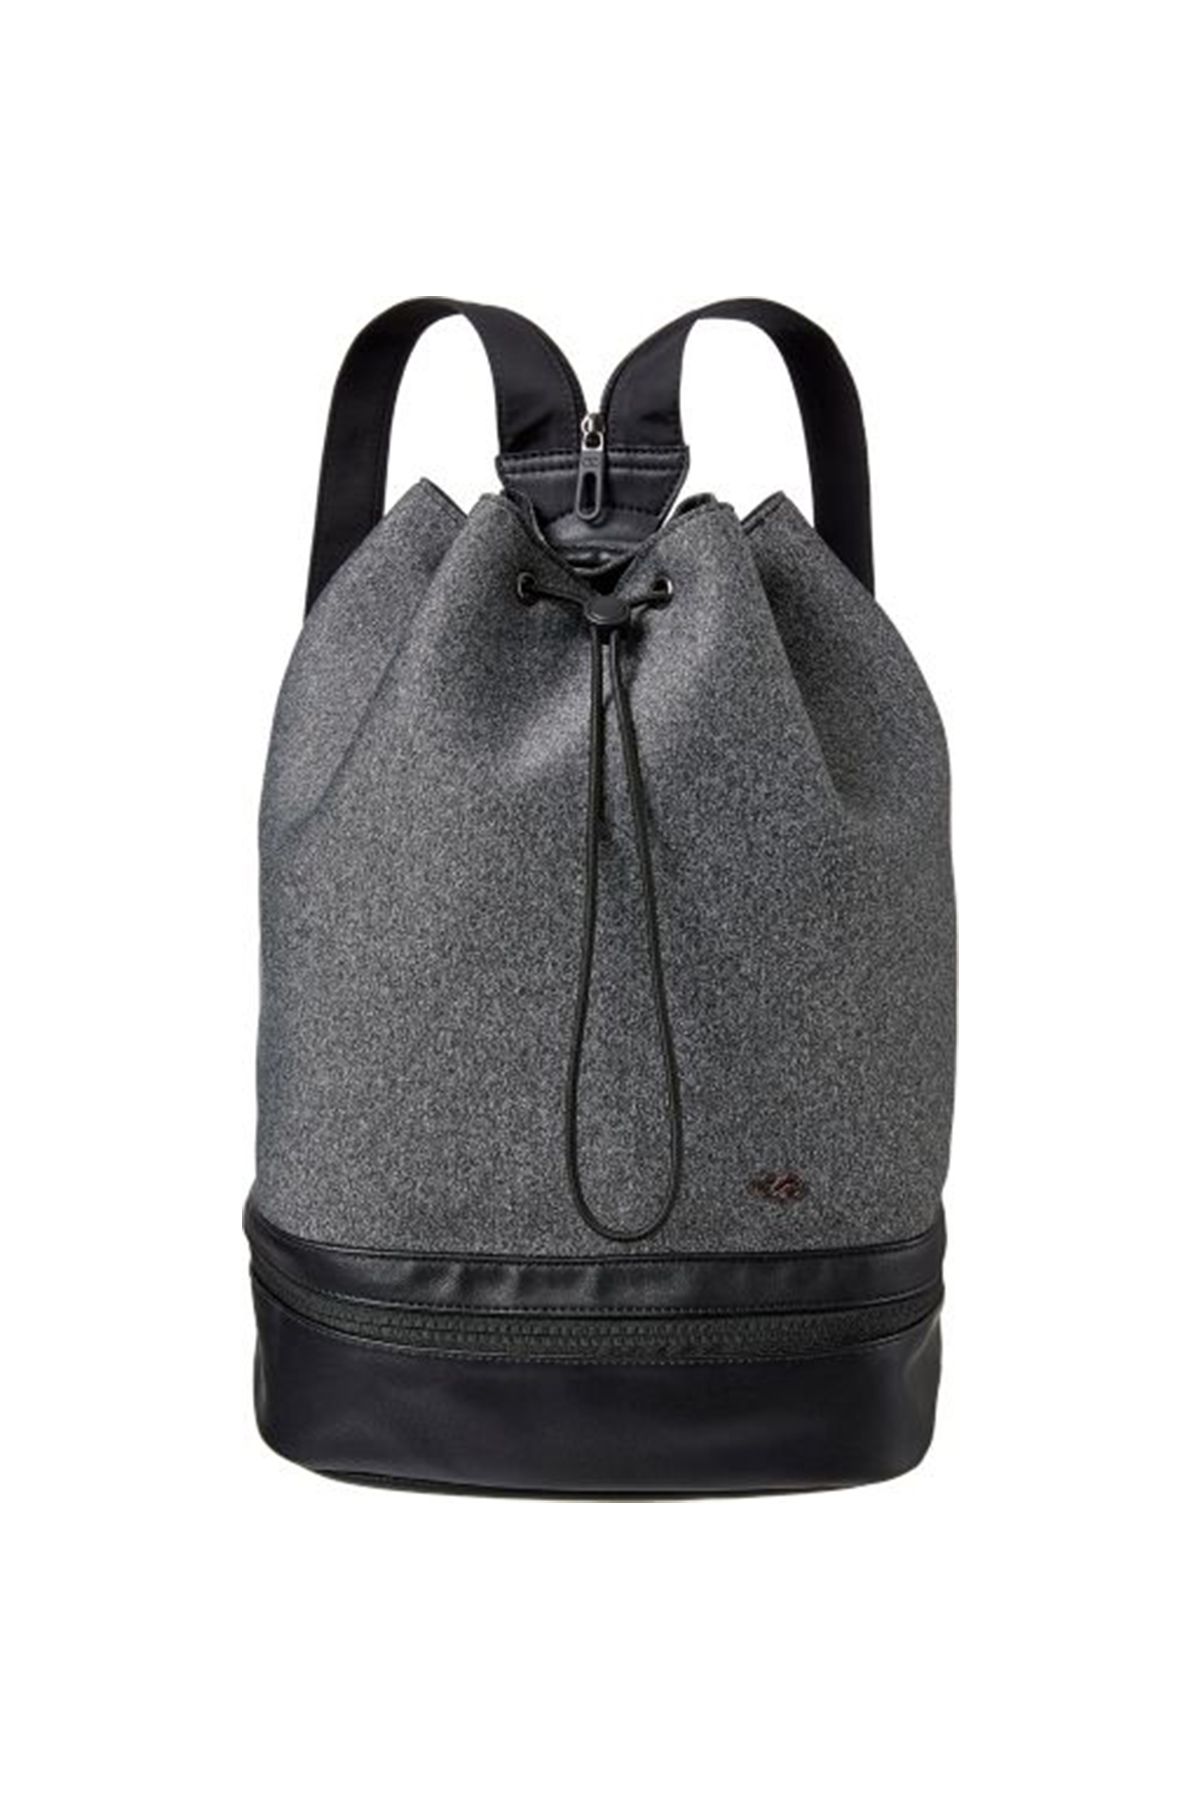 Drawstring Bag Doberman Pinscher Silhouette Floral Shoulder Bags Travel Sport Gym Bag Print Yoga Runner Daypack Shoe Bags with Zipper and Pockets 